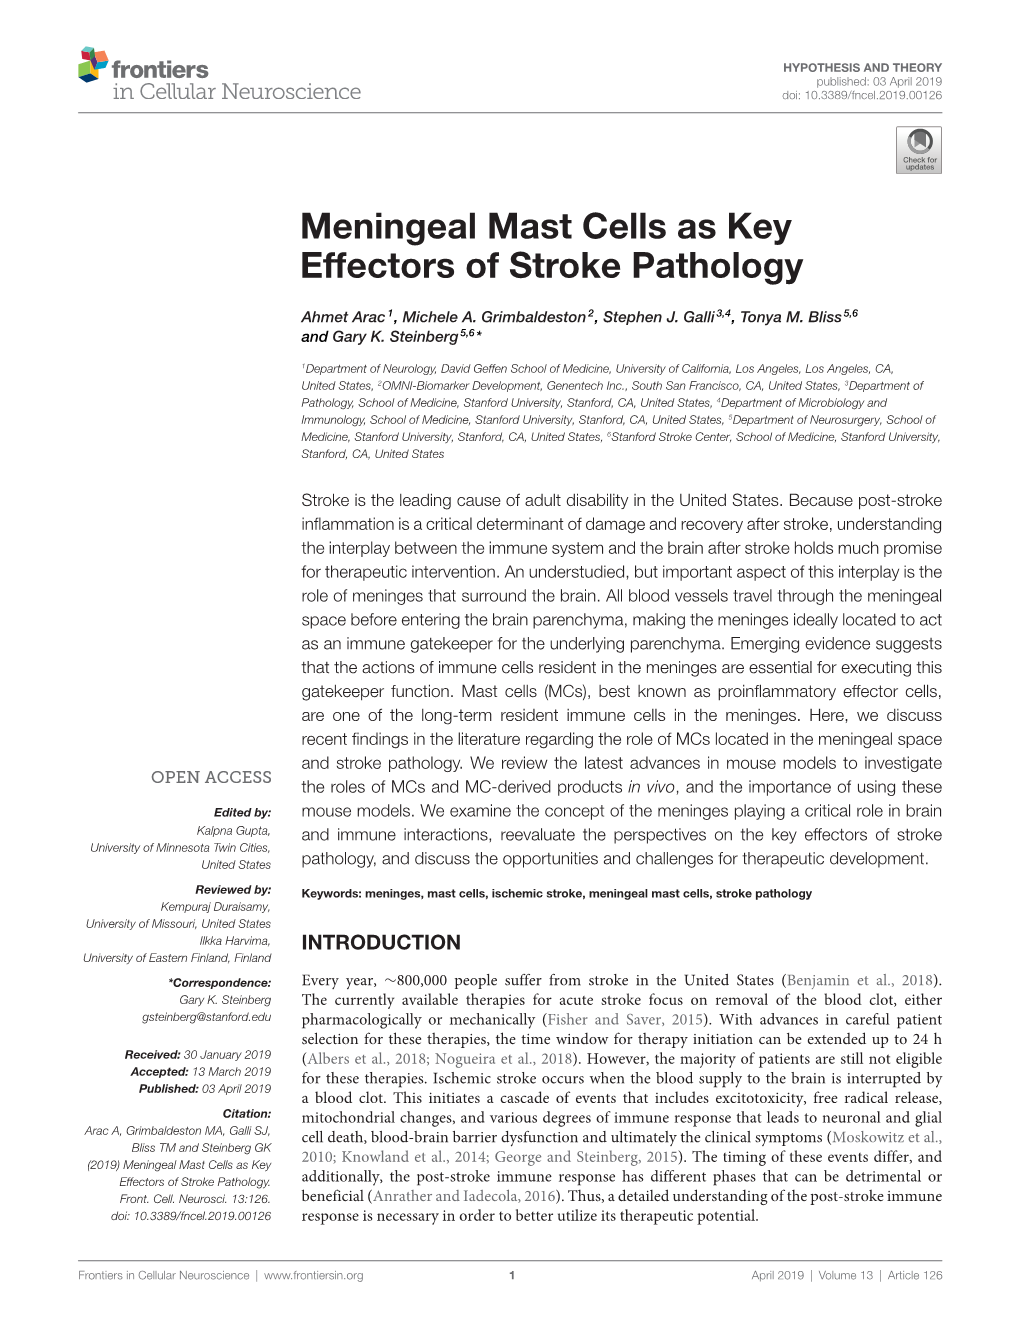 Meningeal Mast Cells As Key Effectors of Stroke Pathology